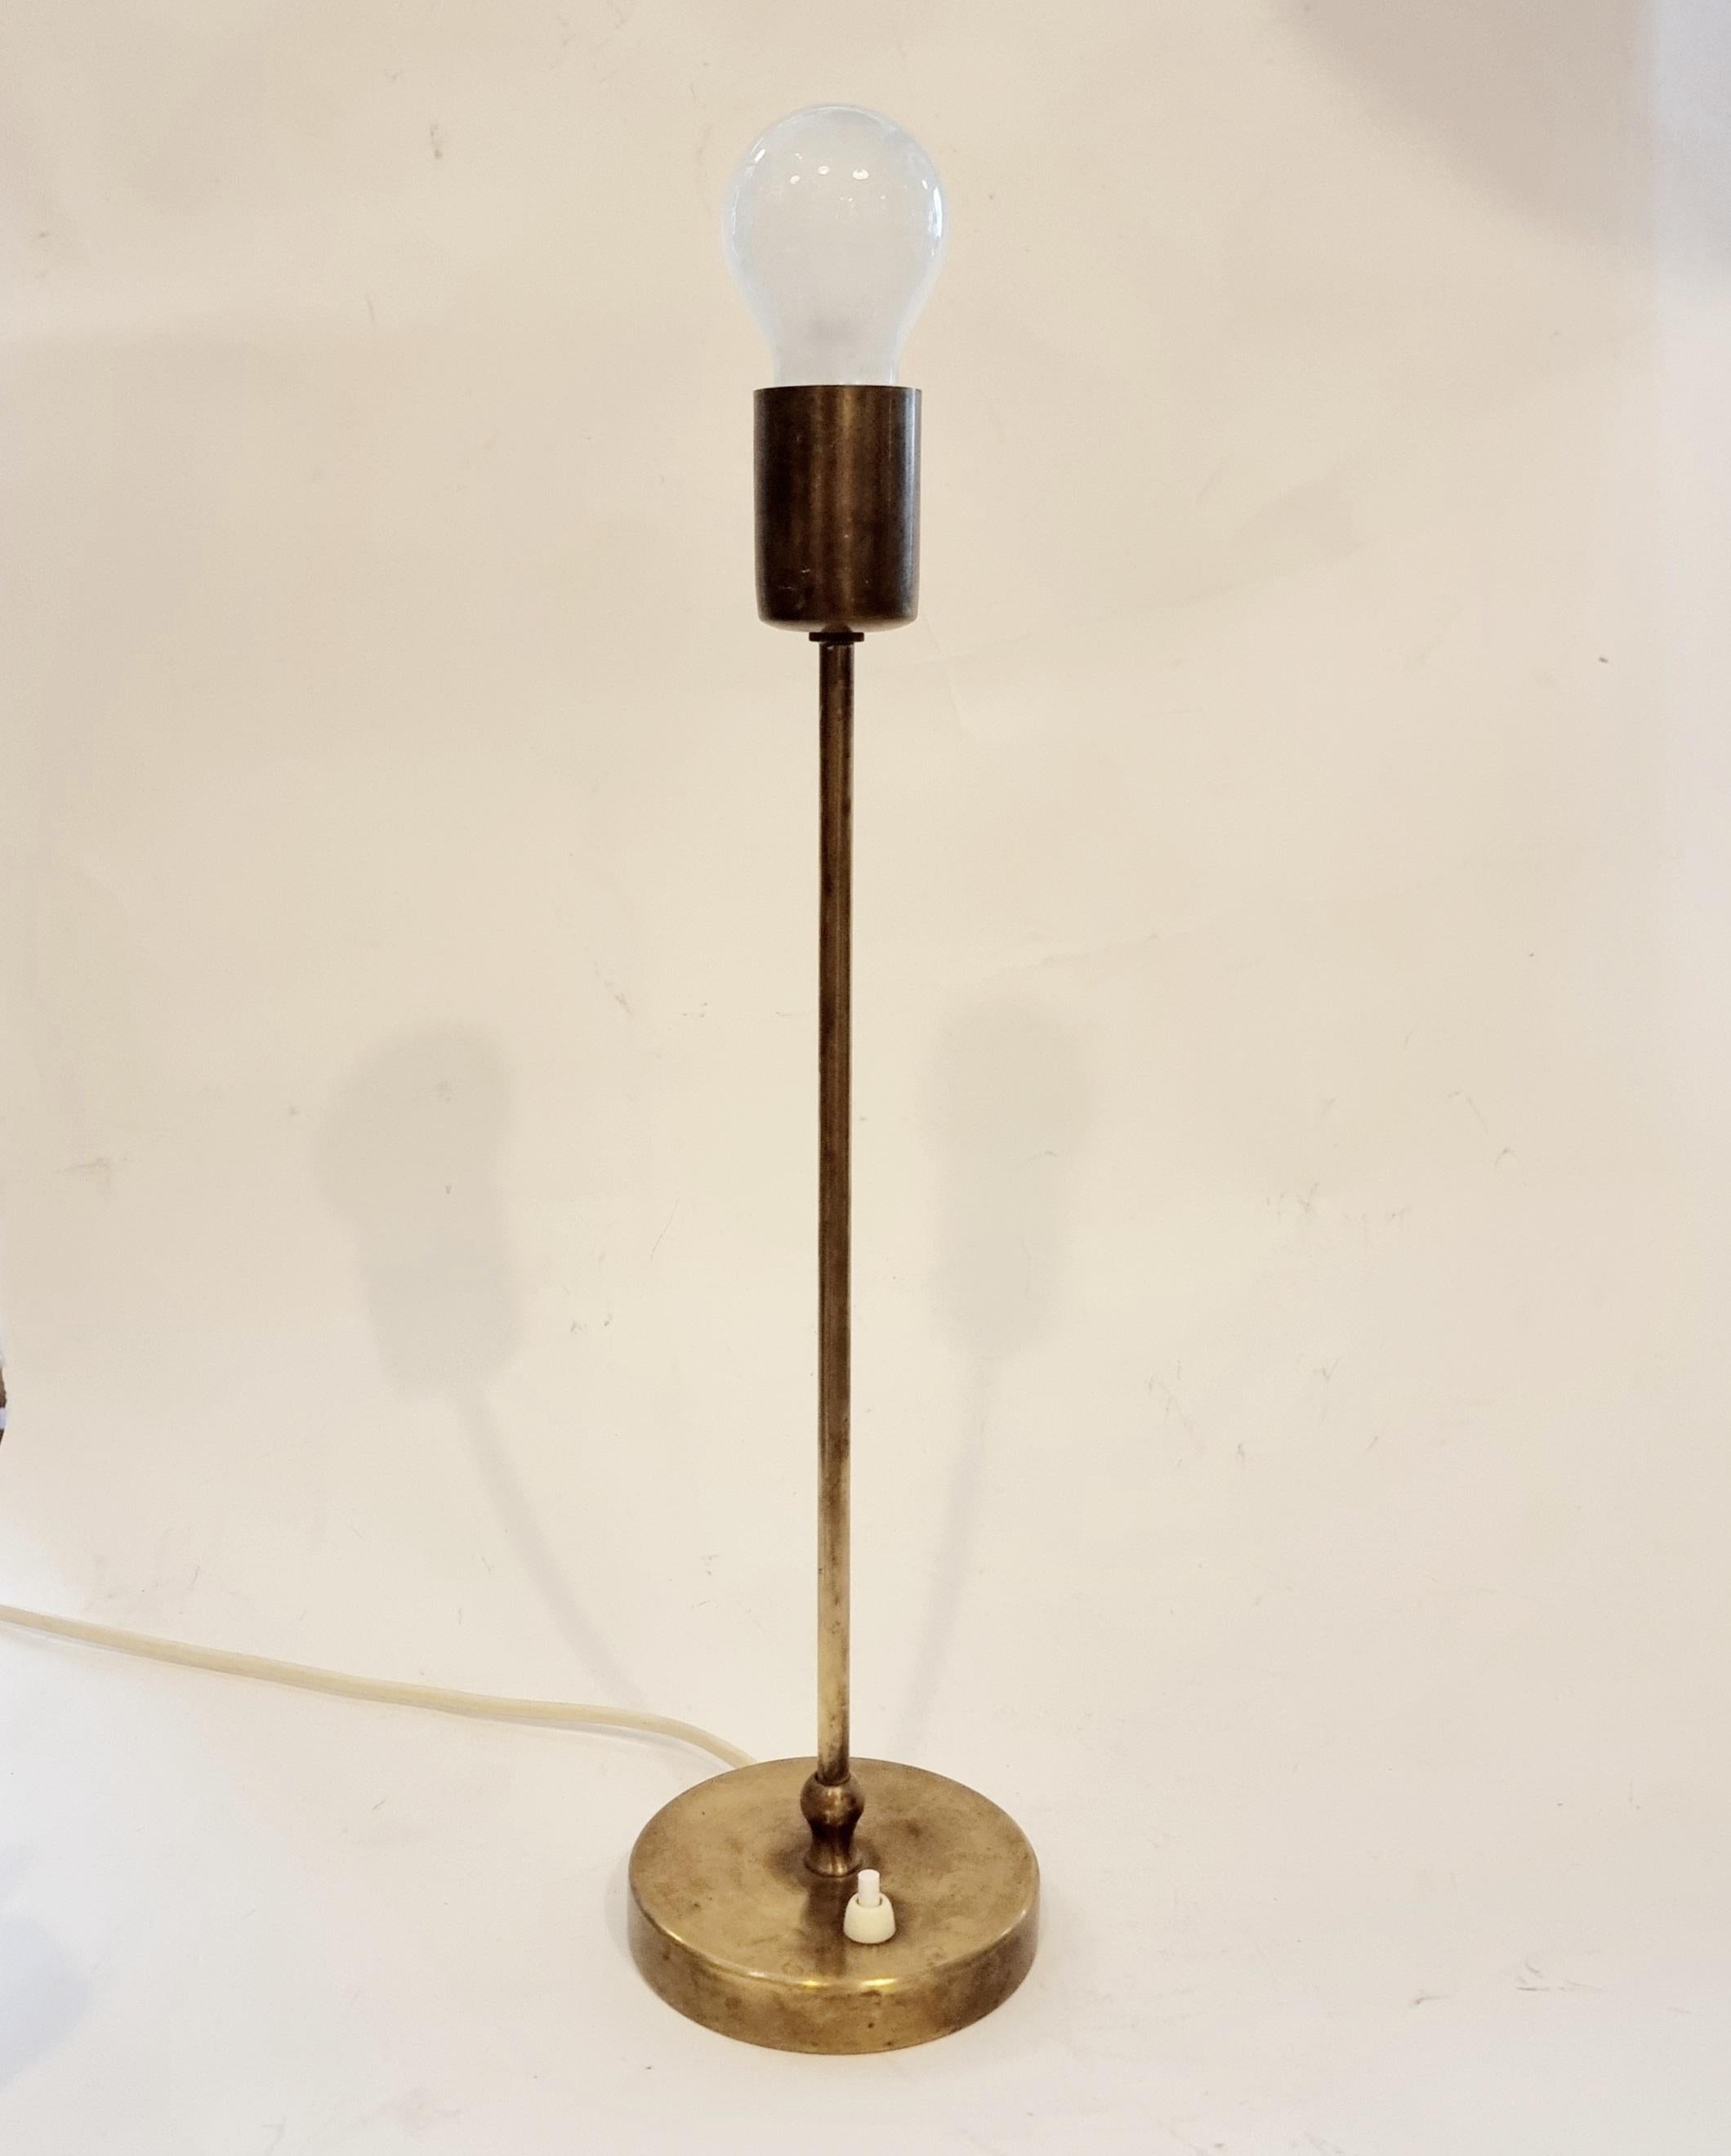 Josef Frank table lamp, model 3223. Designed in 1932 for Firma Svenskt Tenn. 

In solid brass, marked Svenskt Tenn 3223. This example is made during mid-1900s.